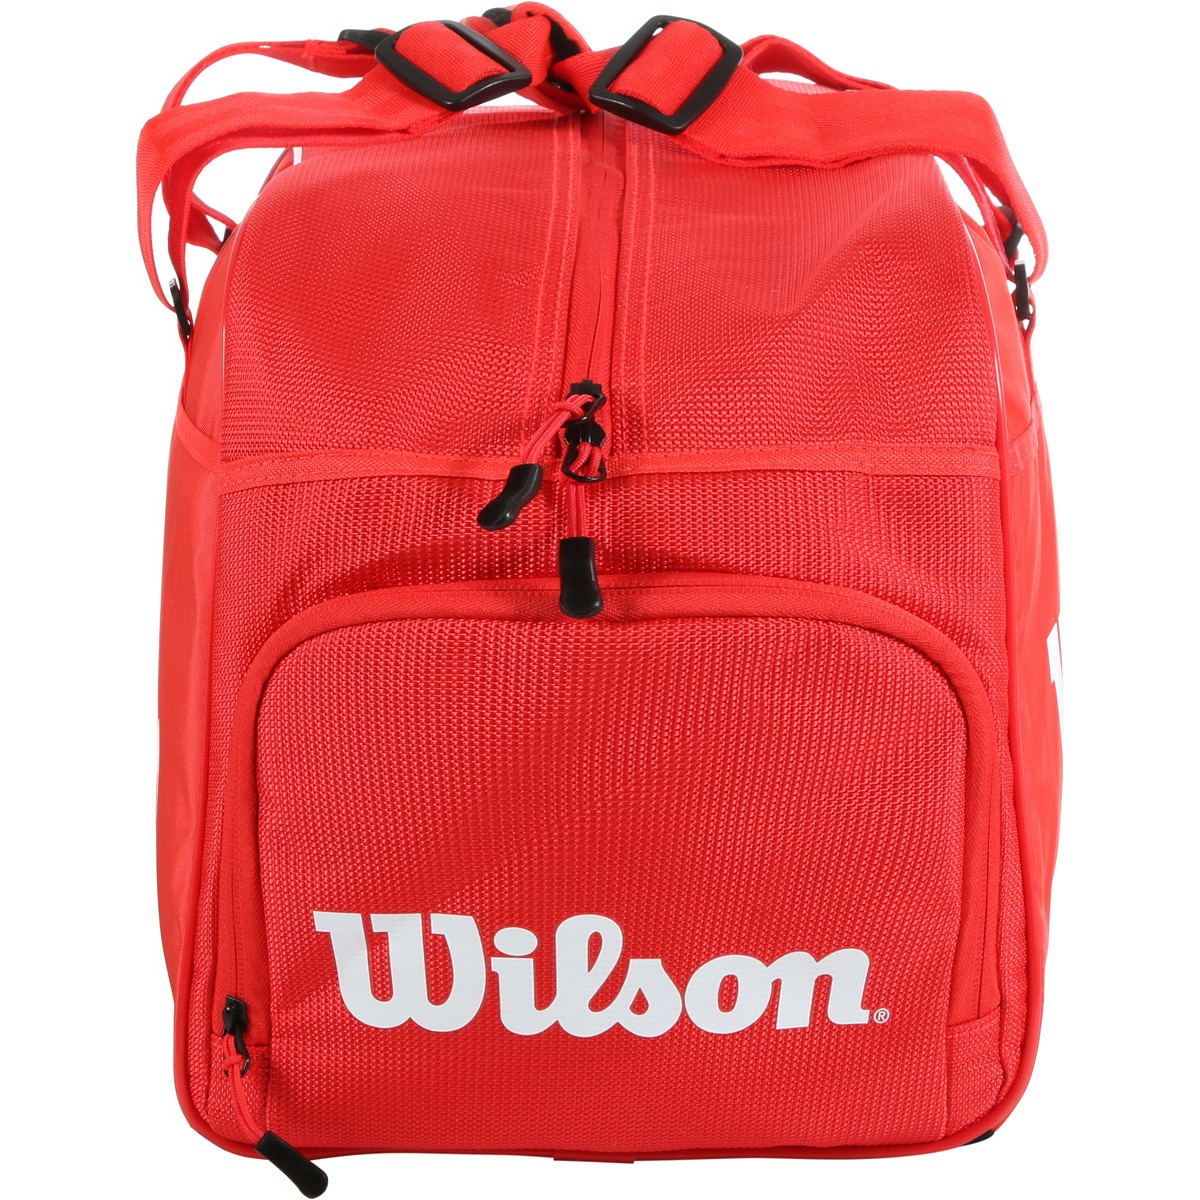 Wilson Super Tour Duffle Bag